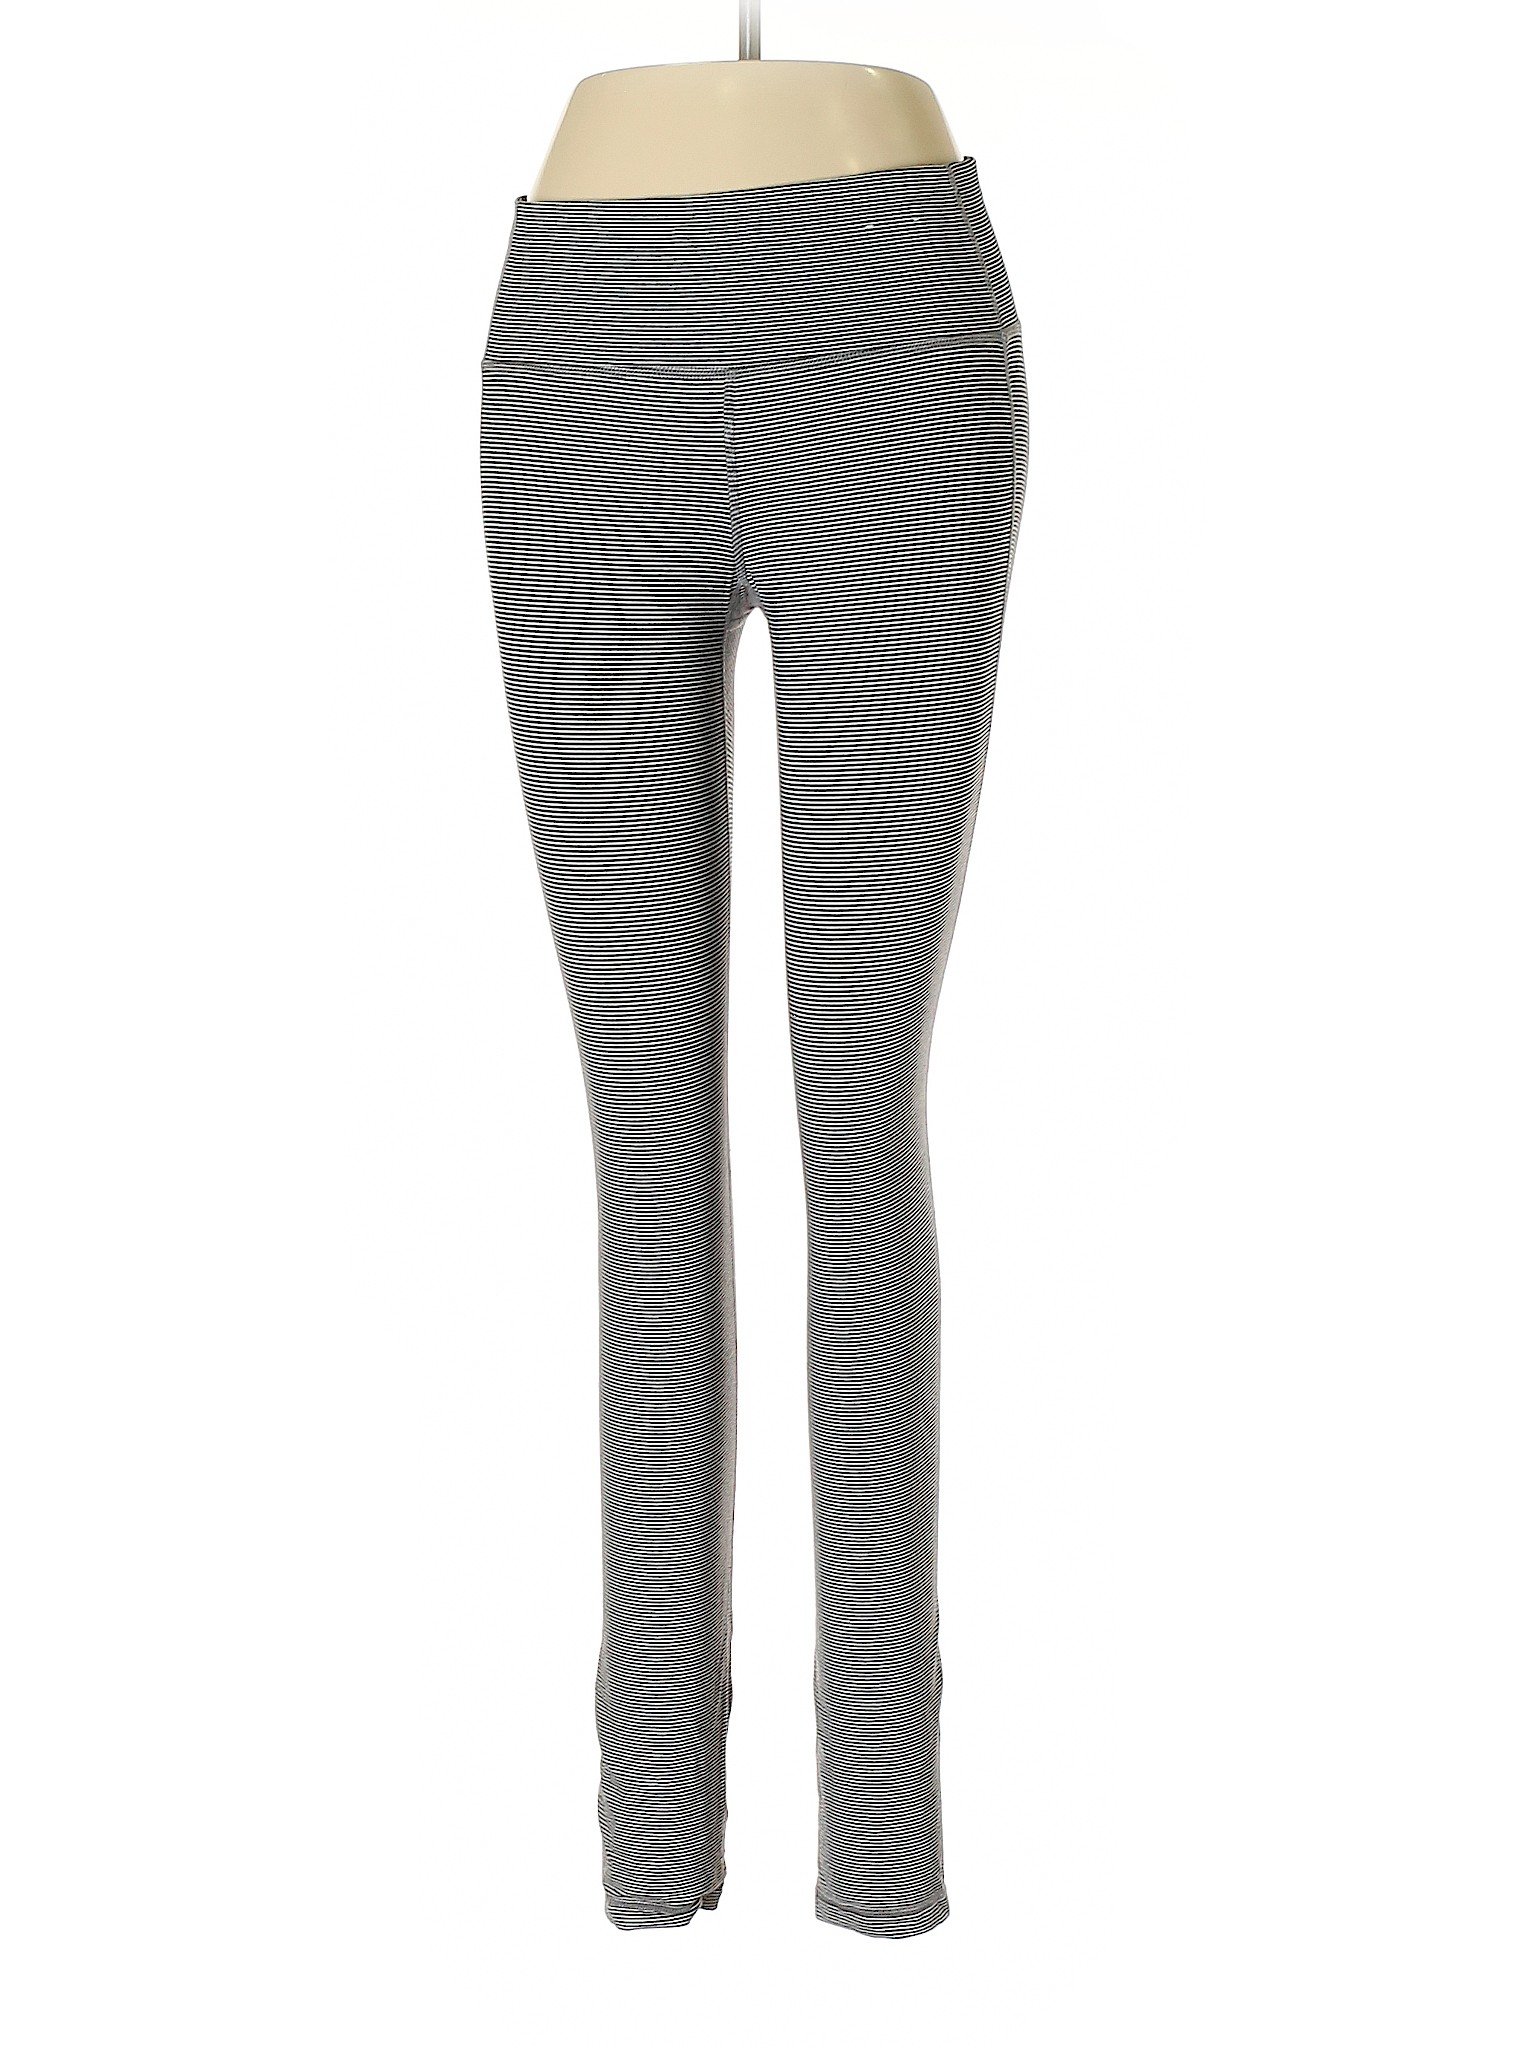 Gap Fit Women Gray Active Pants XS | eBay